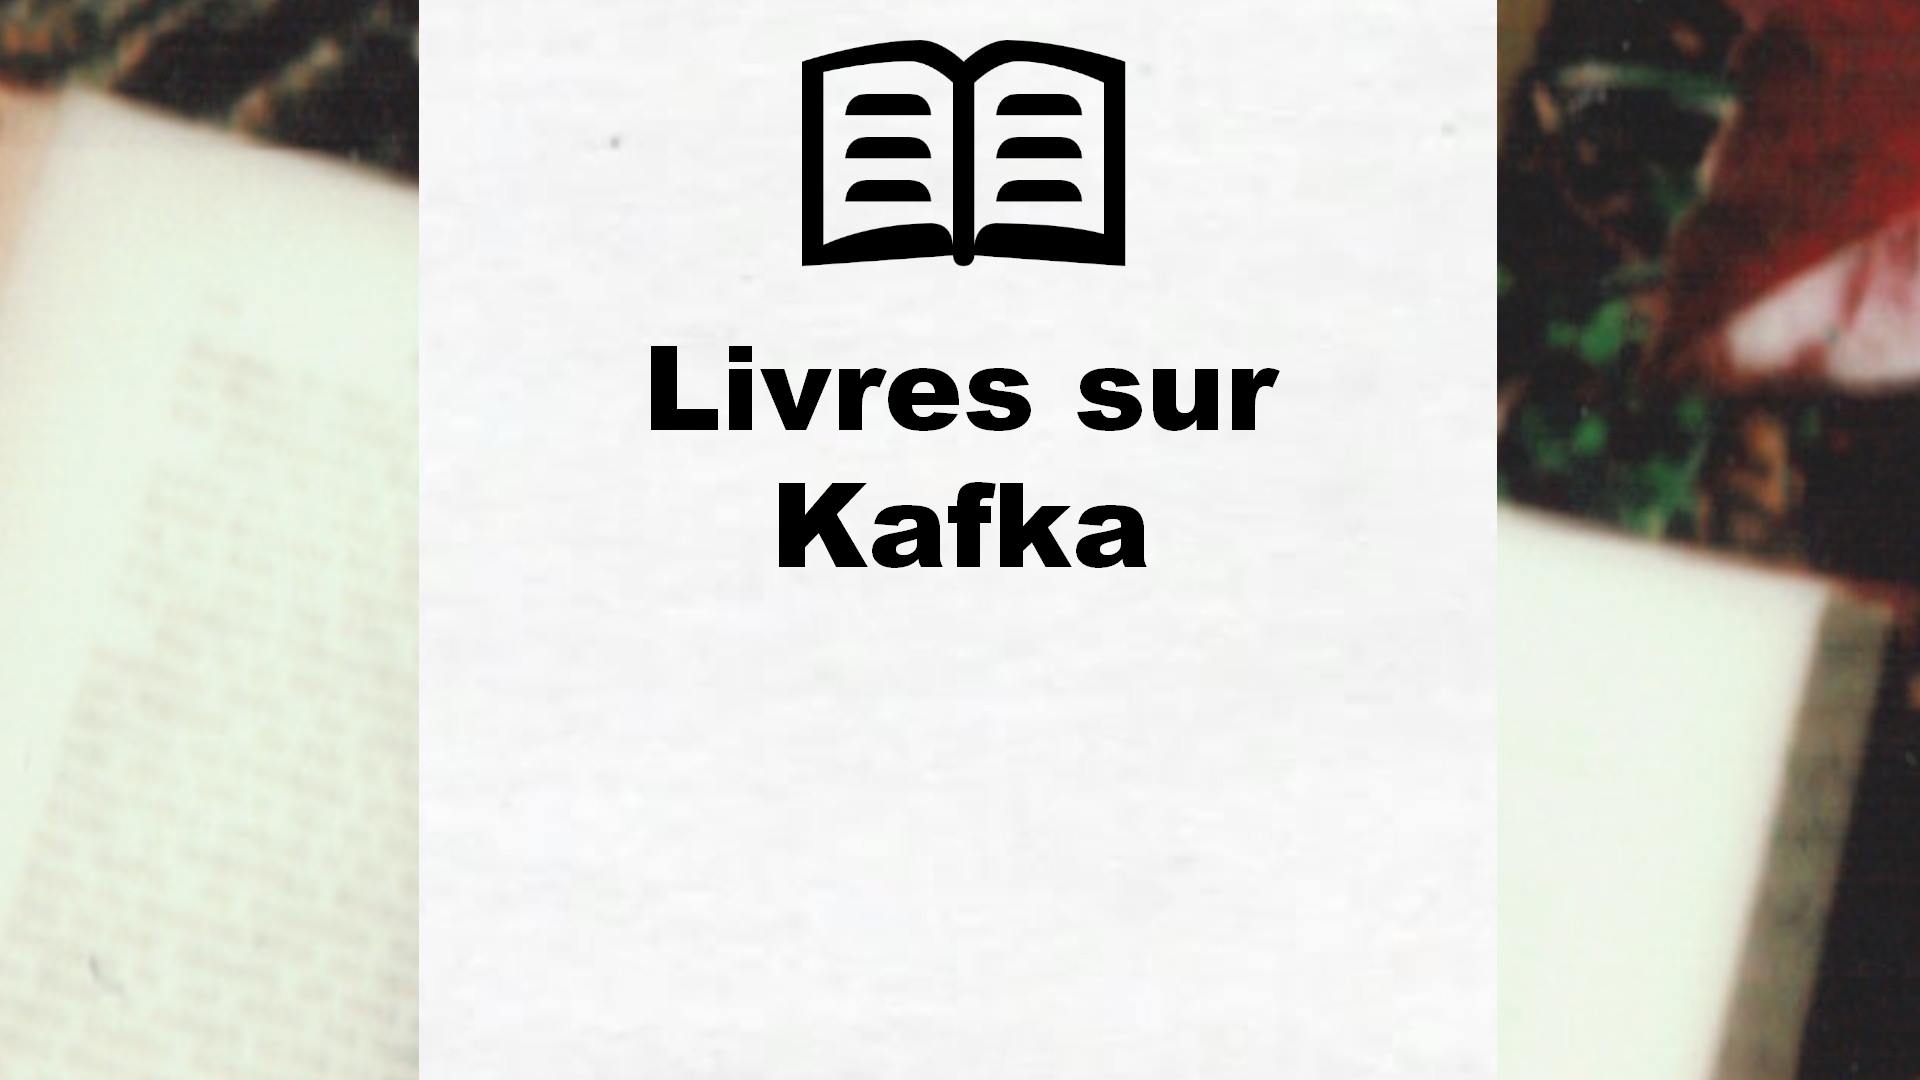 Livres sur Kafka